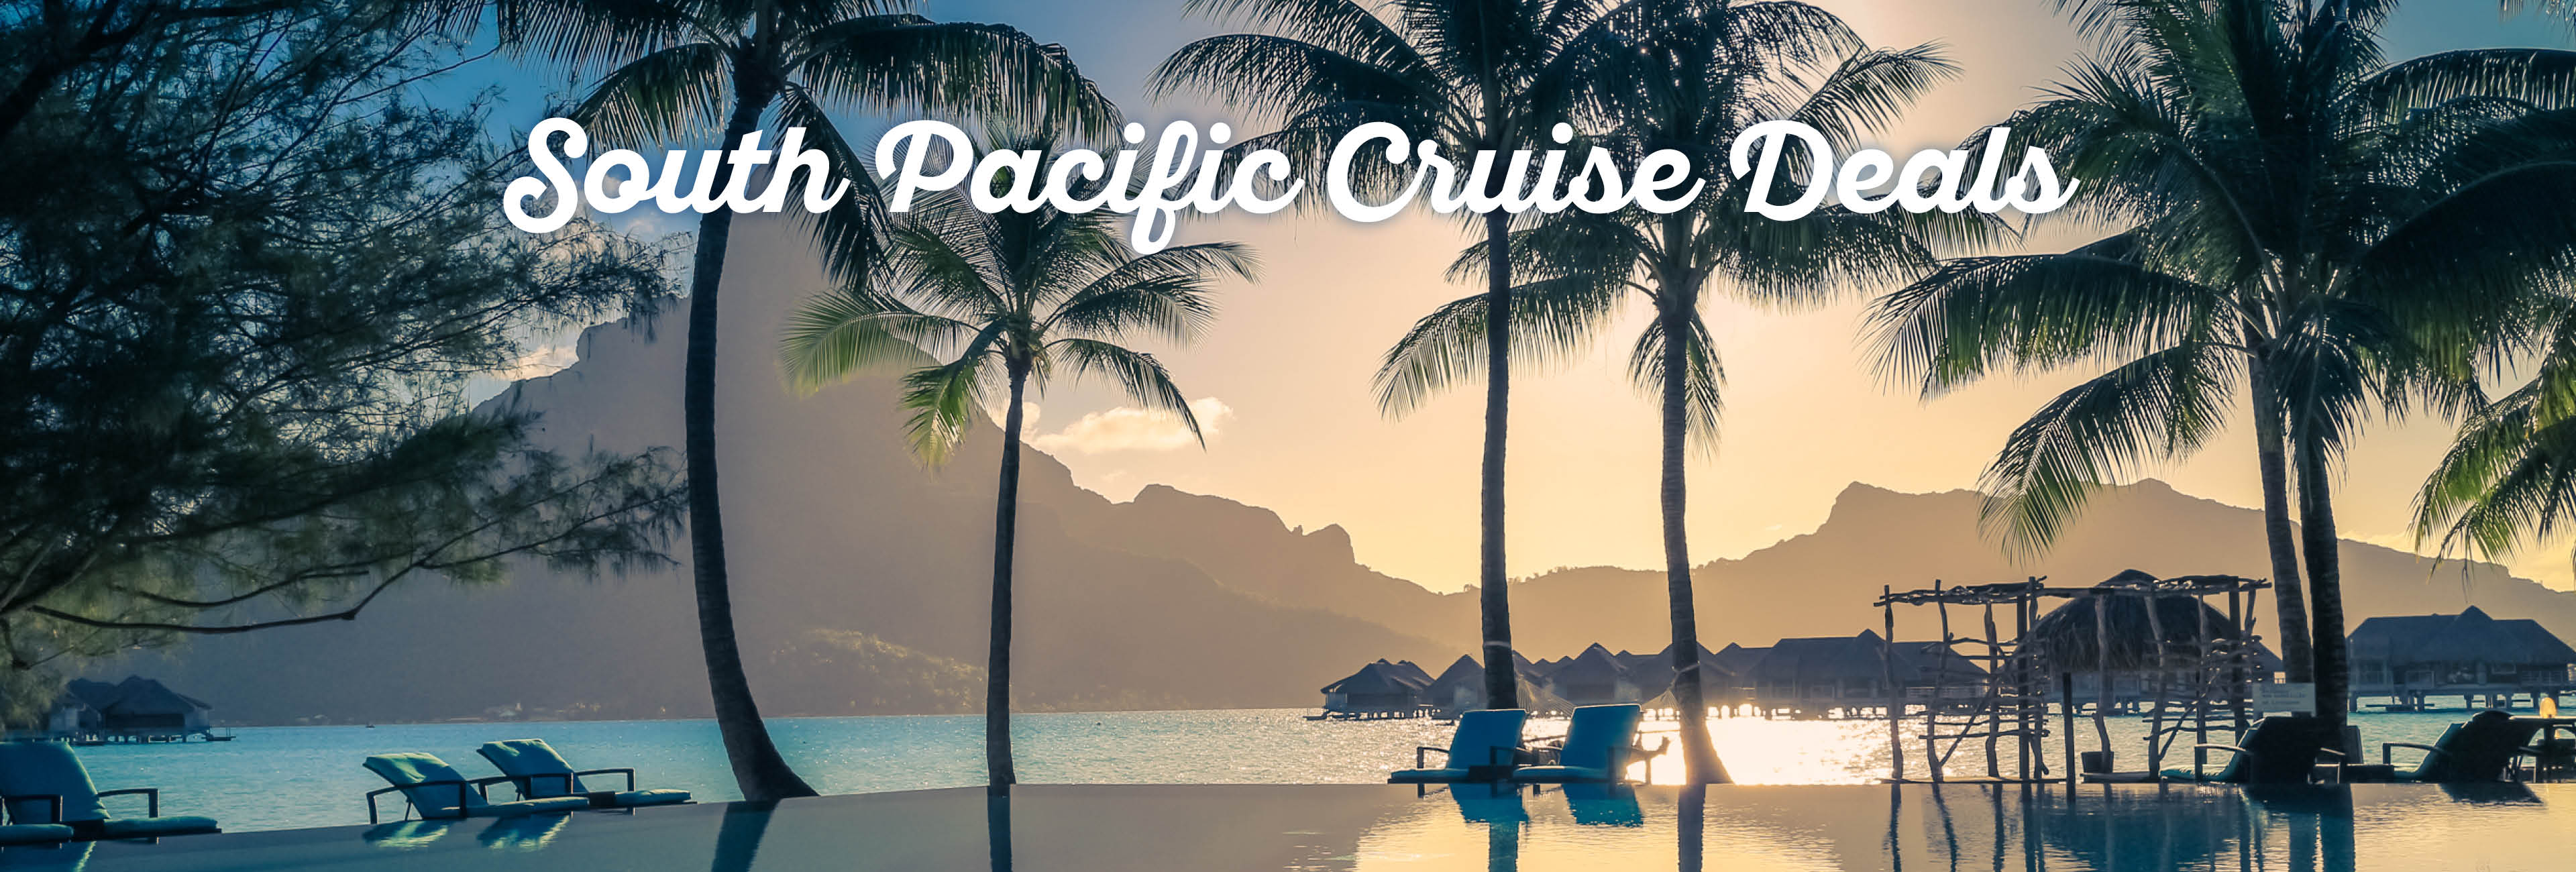 south-pacific-cruise-deals-4.jpg